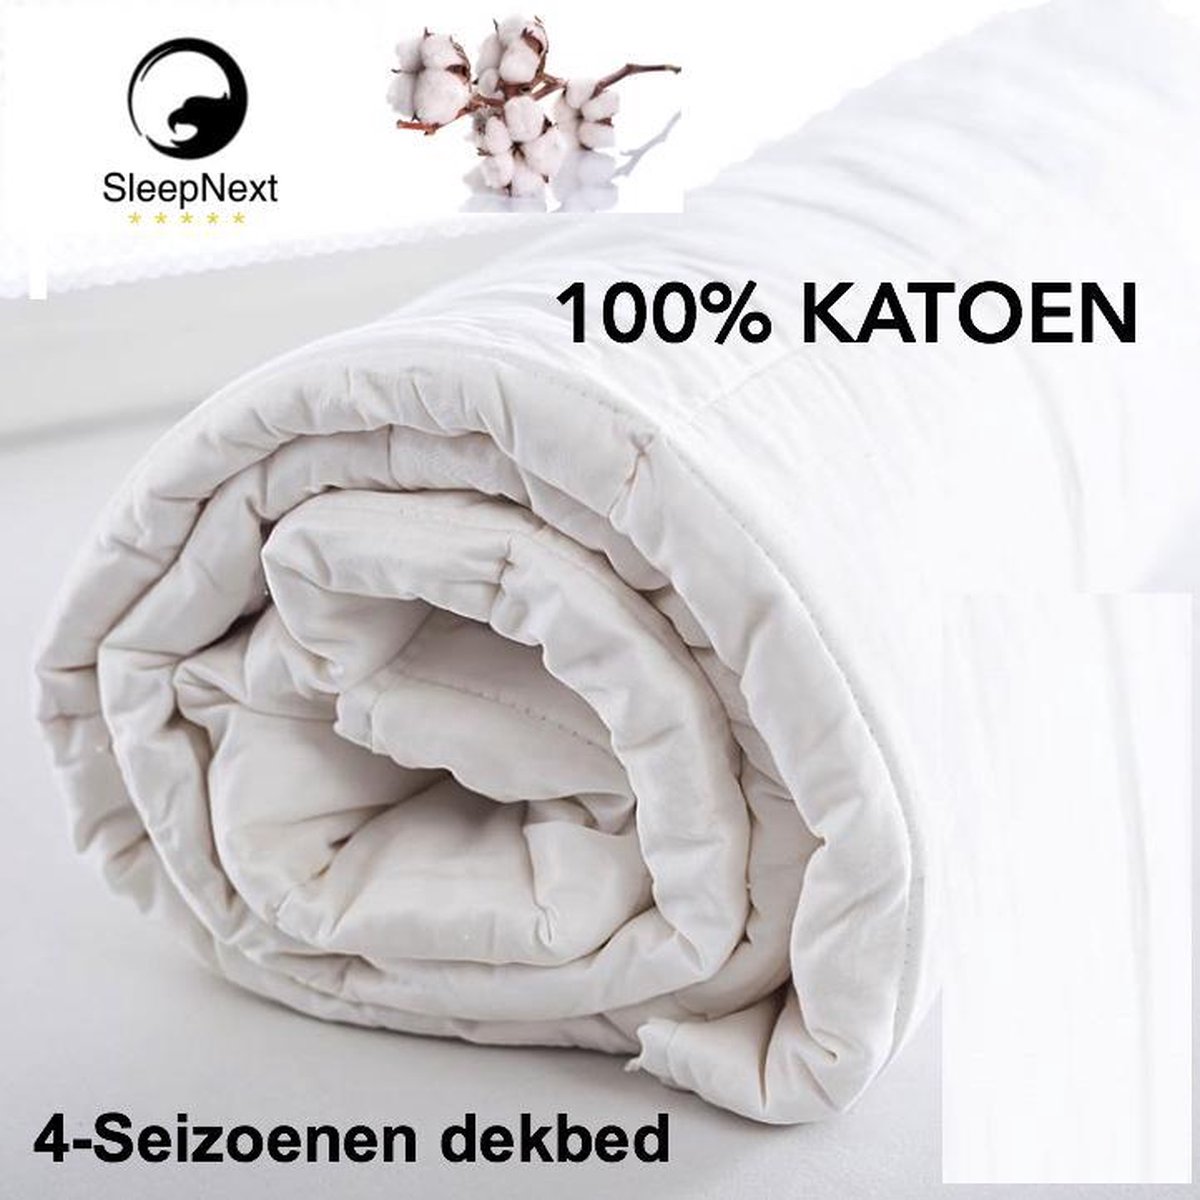 SleepNext - 100% KATOEN - 4-Seizoenen dekbed - 140x200cm | bol.com